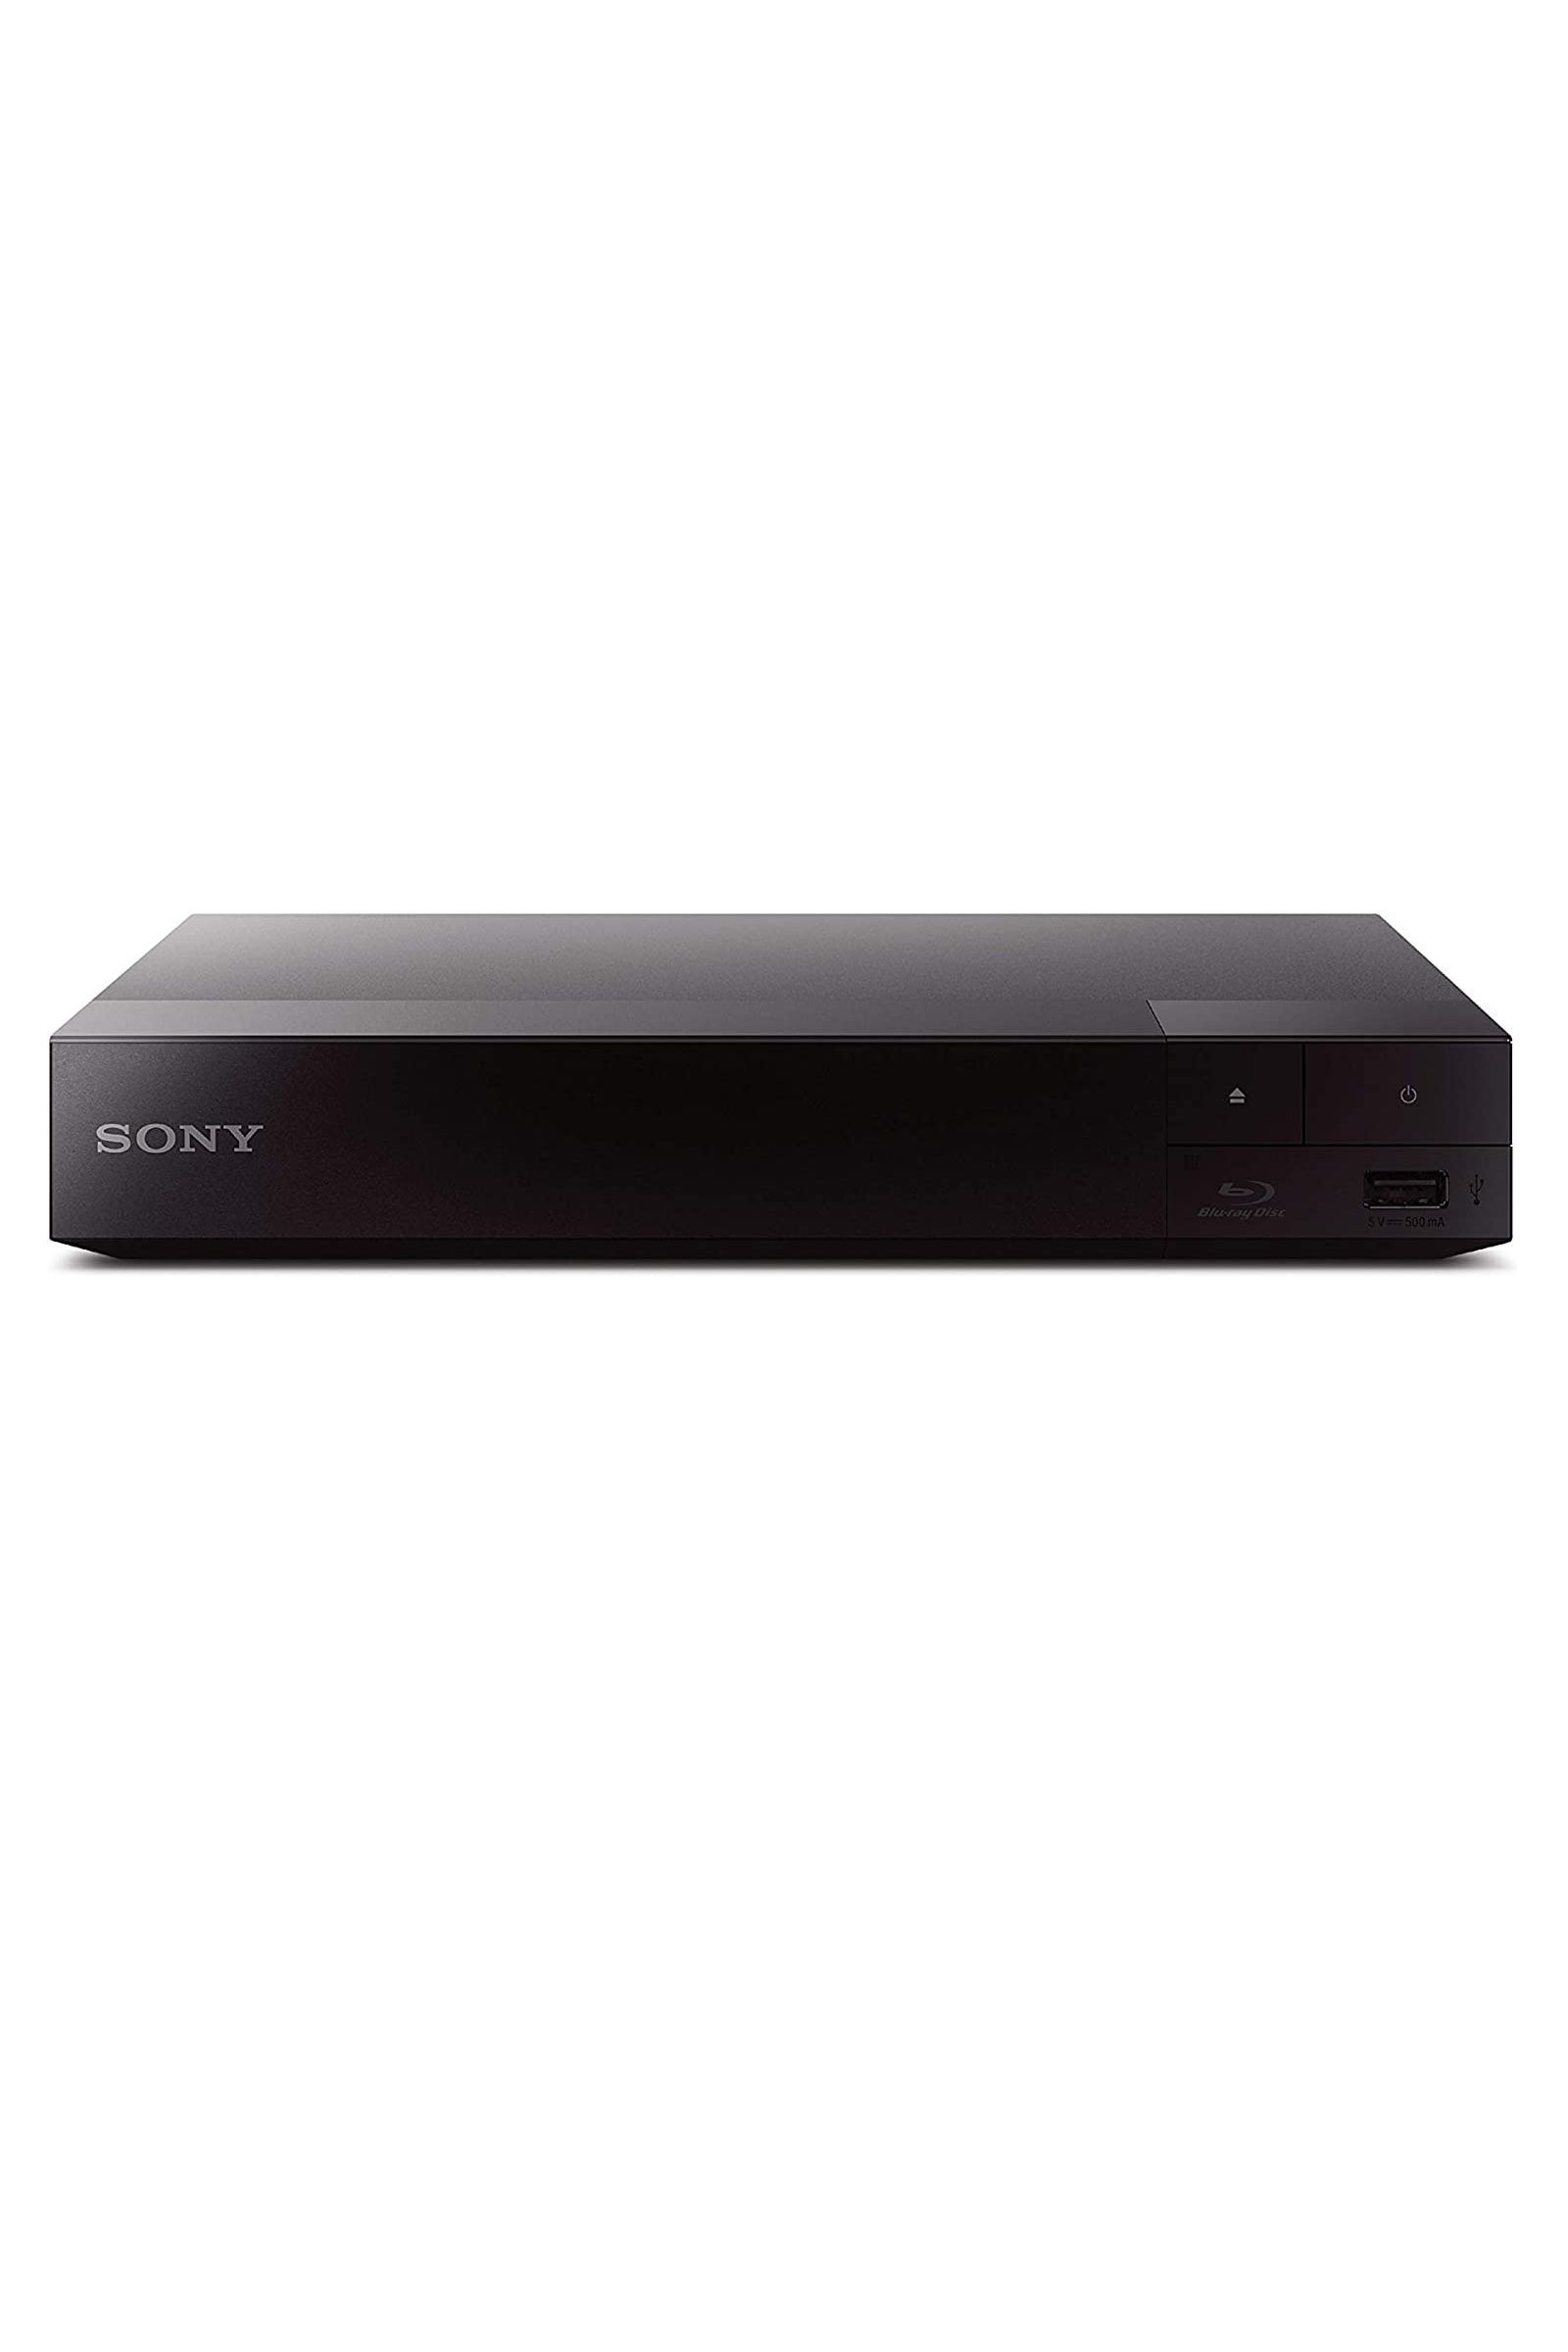 Sony BDP S3700 Blu-ray Player